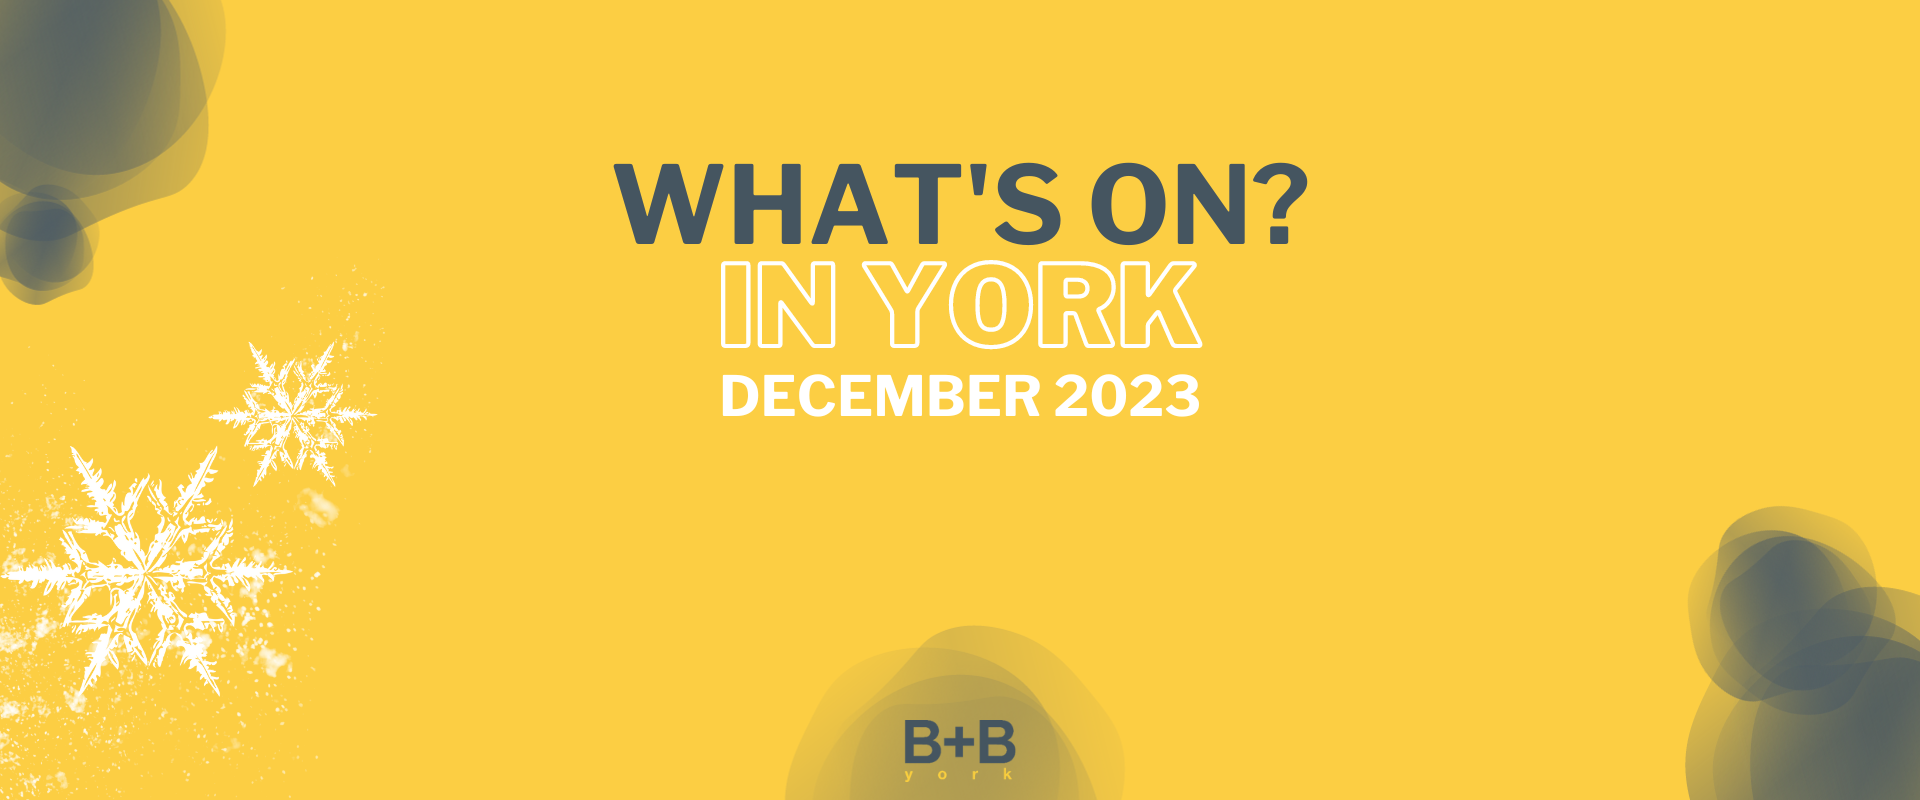 What's on in York - December 2023 - B+B York